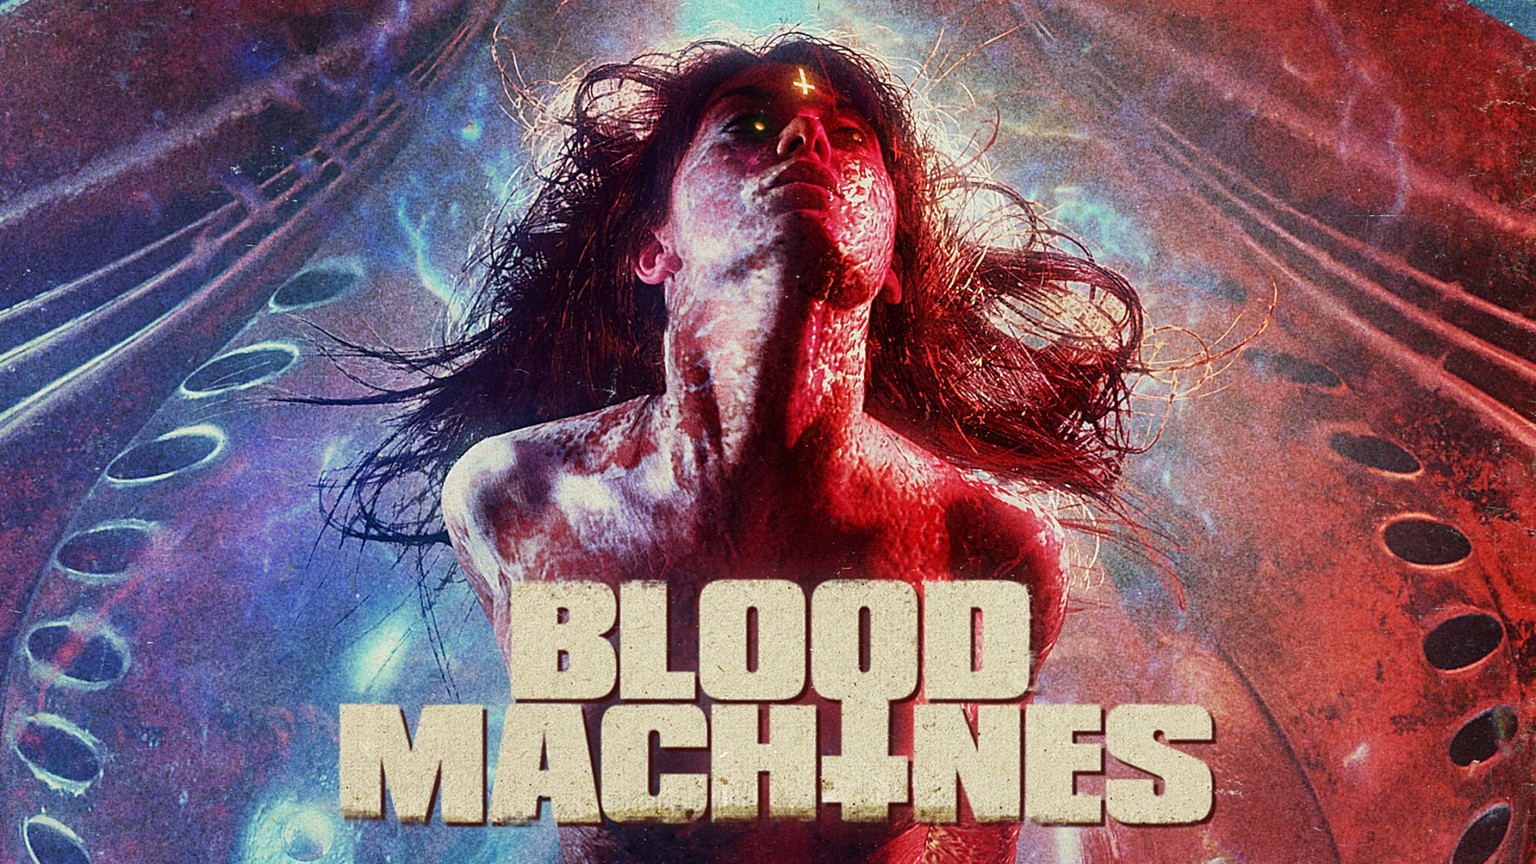 General 1536x864 Blood Machines retro style women movie poster Carpenter Brut Seth Ickerman movies